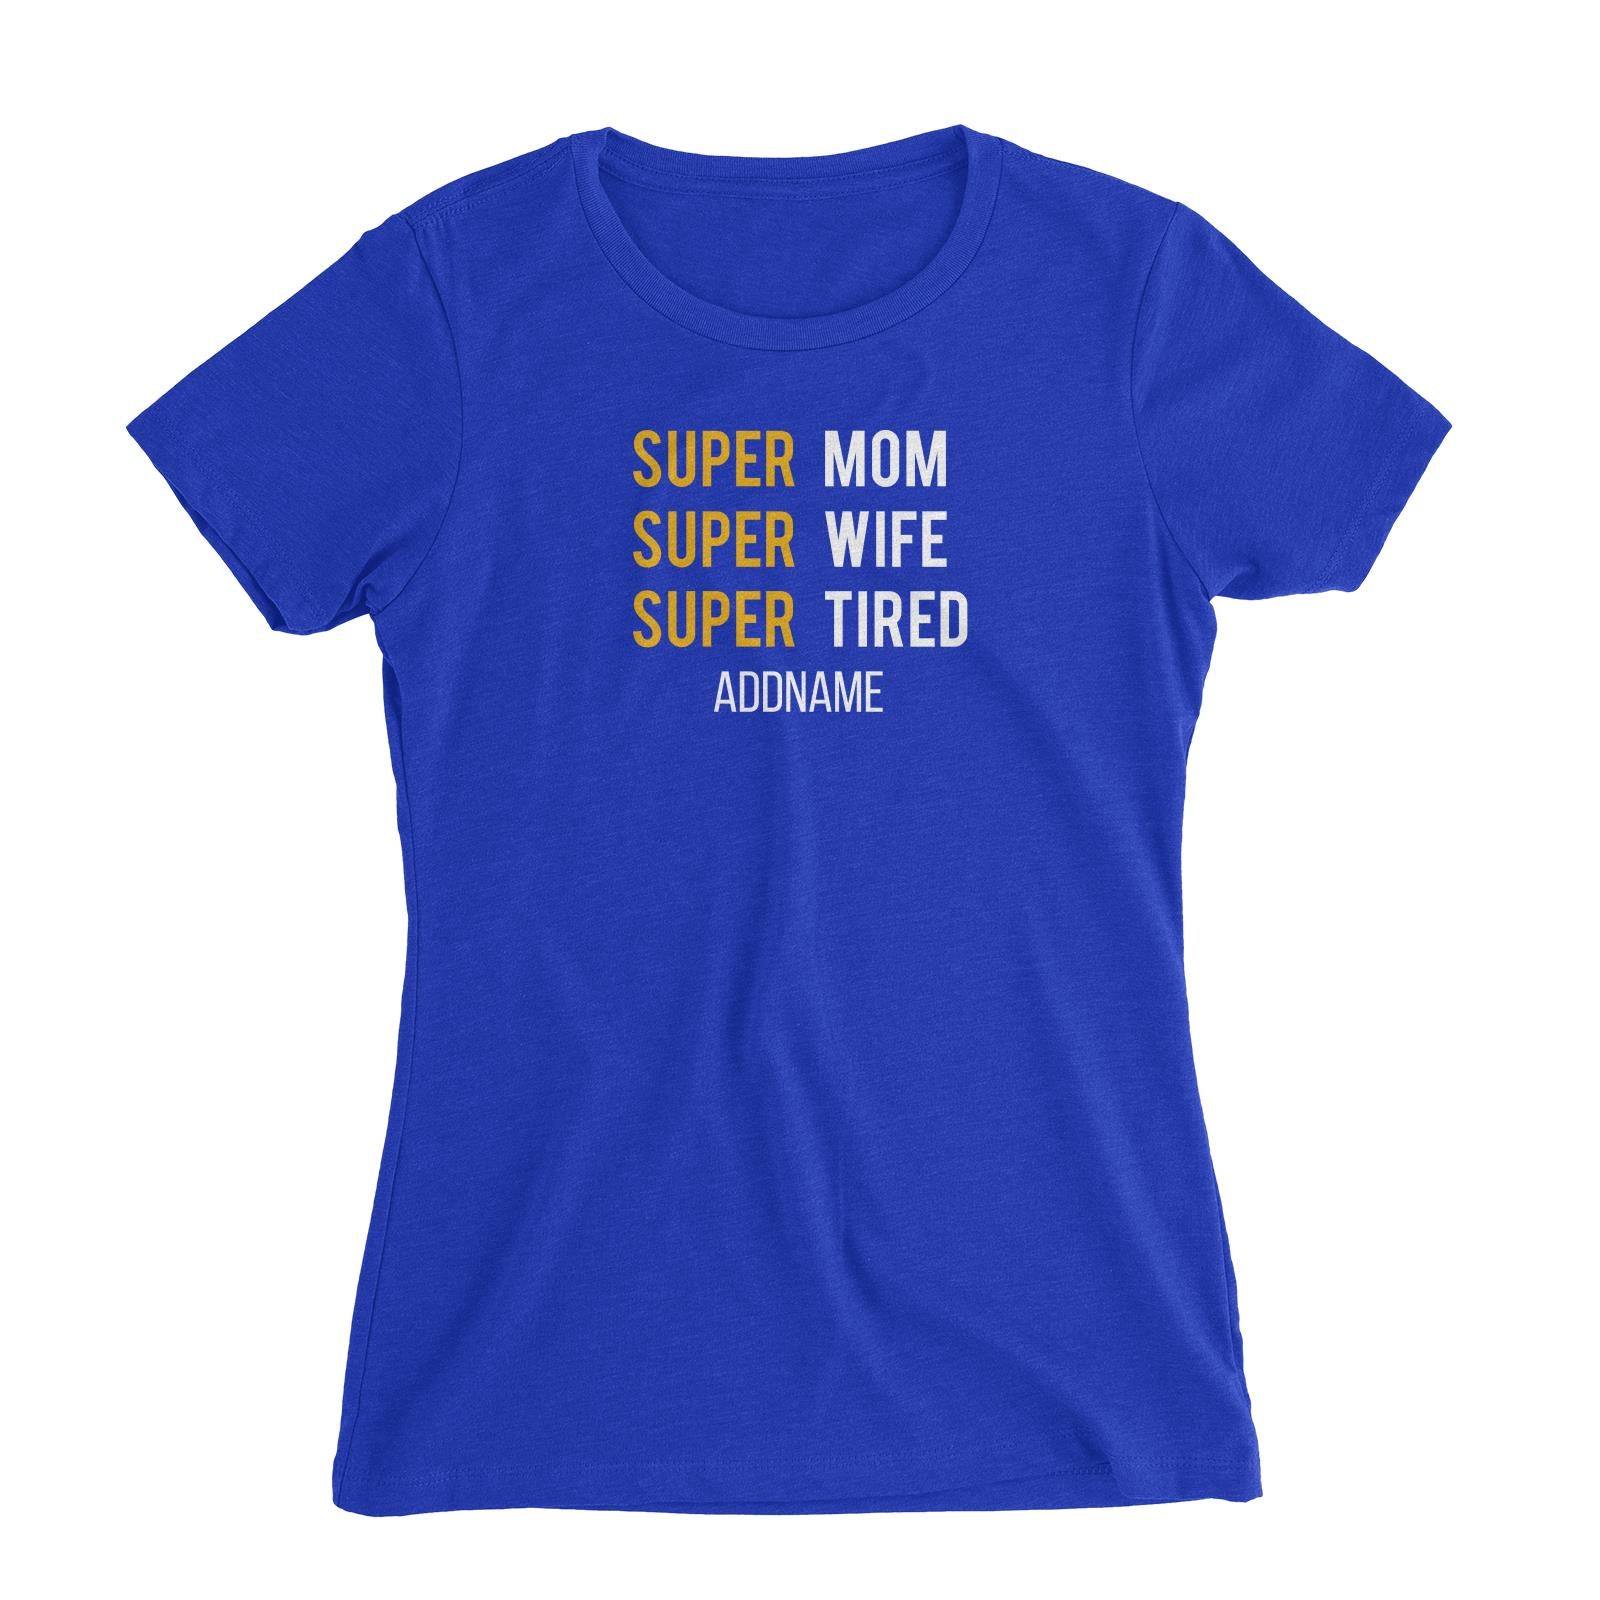 Super Mom Super Wife Super Tired Women's Slim Fit T-Shirt